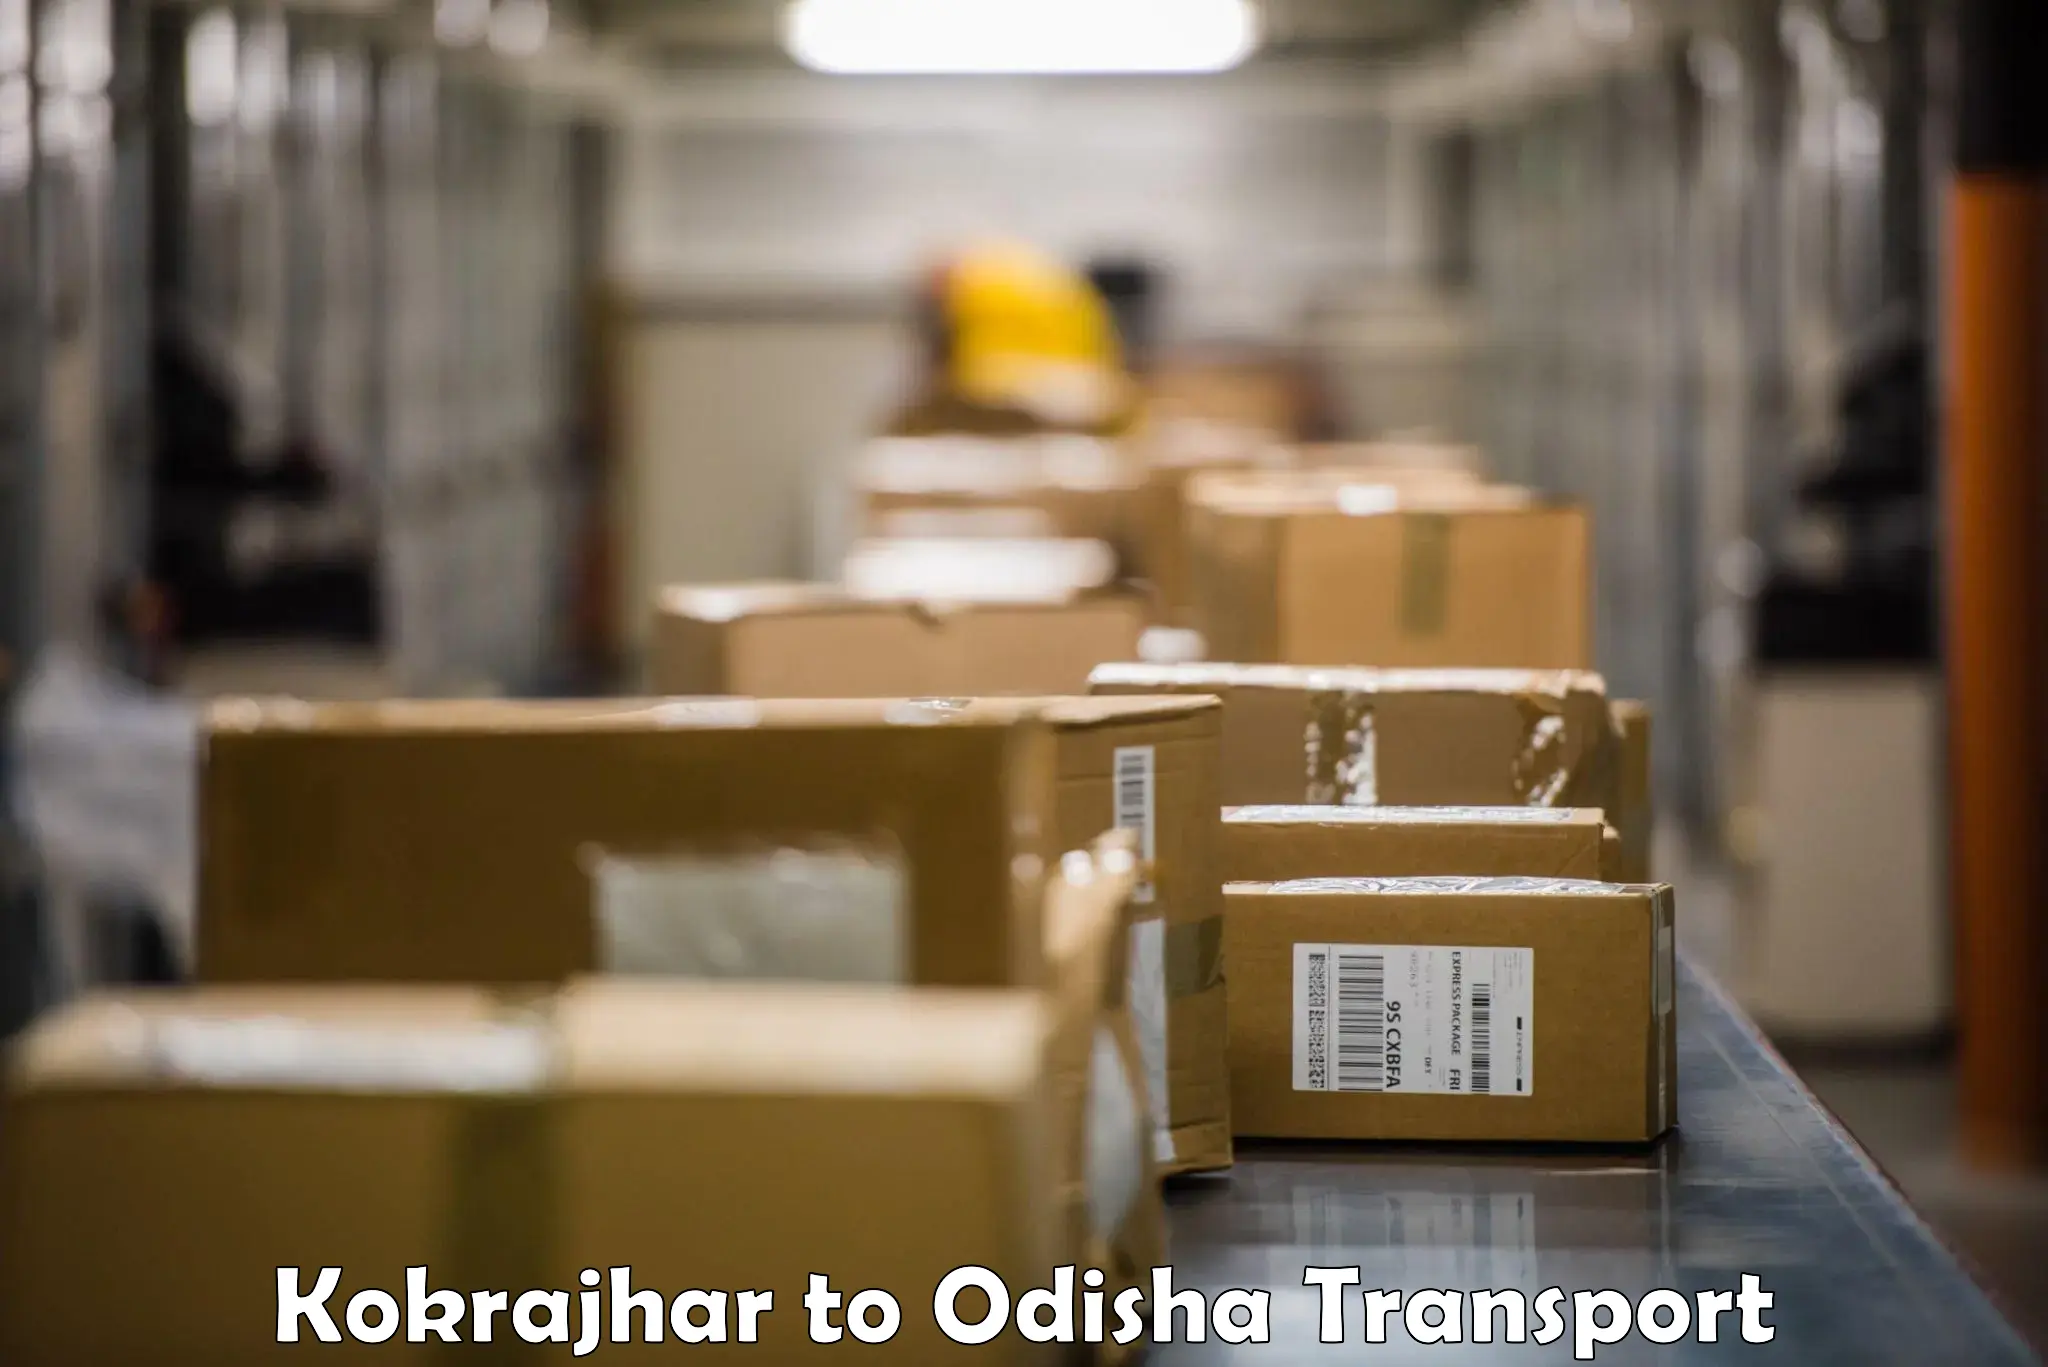 Truck transport companies in India Kokrajhar to Asika